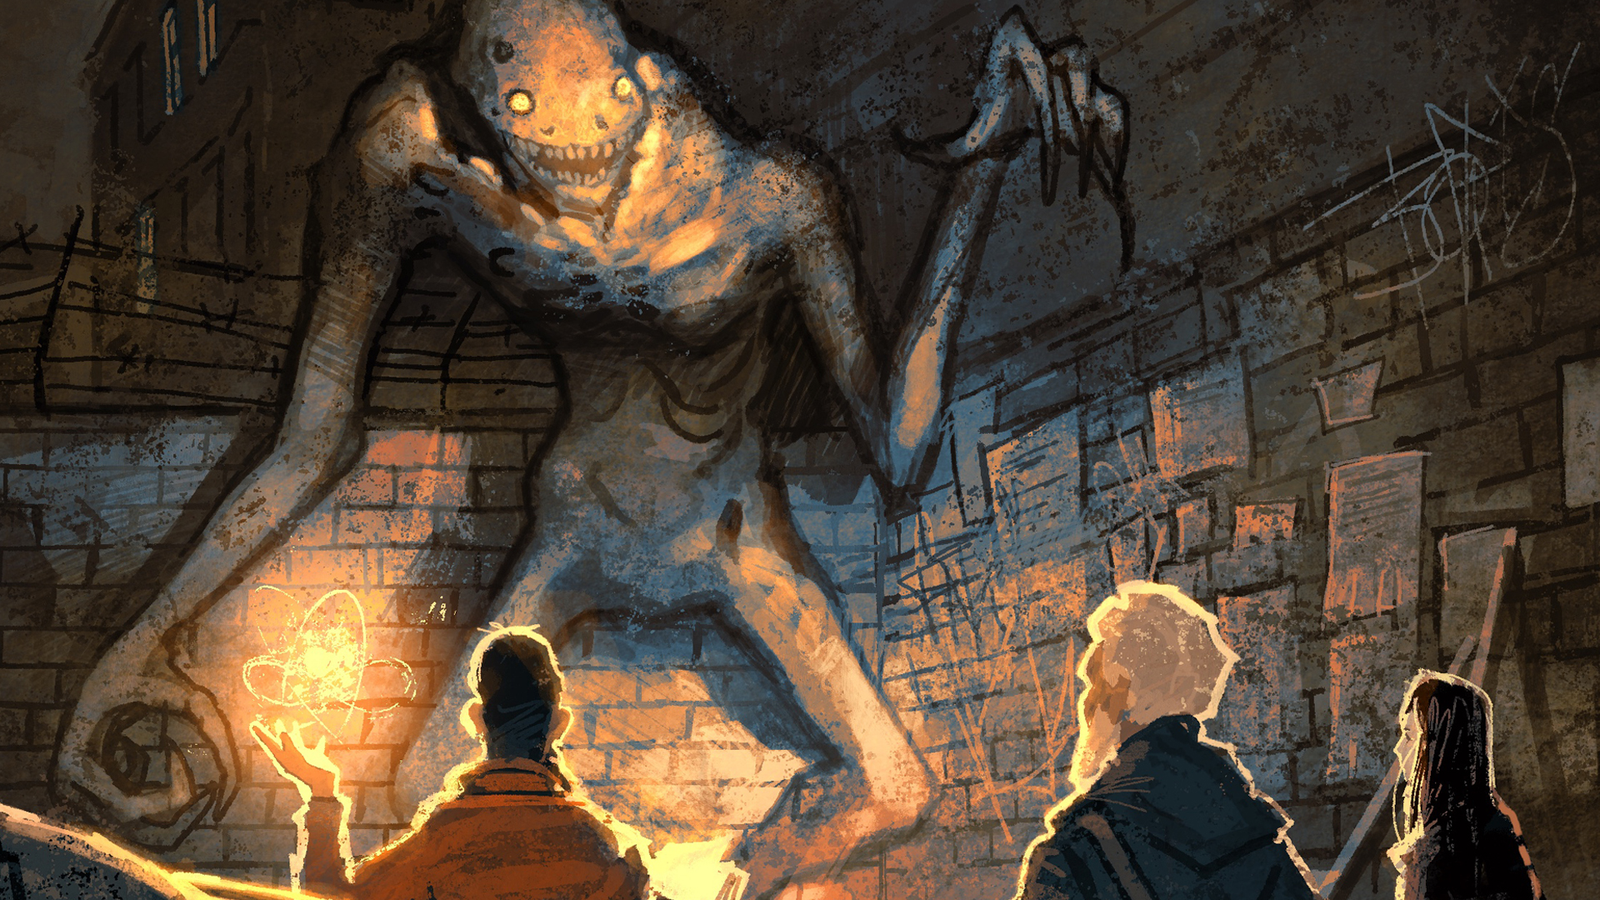 WORLD OF HORROR Review: Nightmarish Stories Illustrated